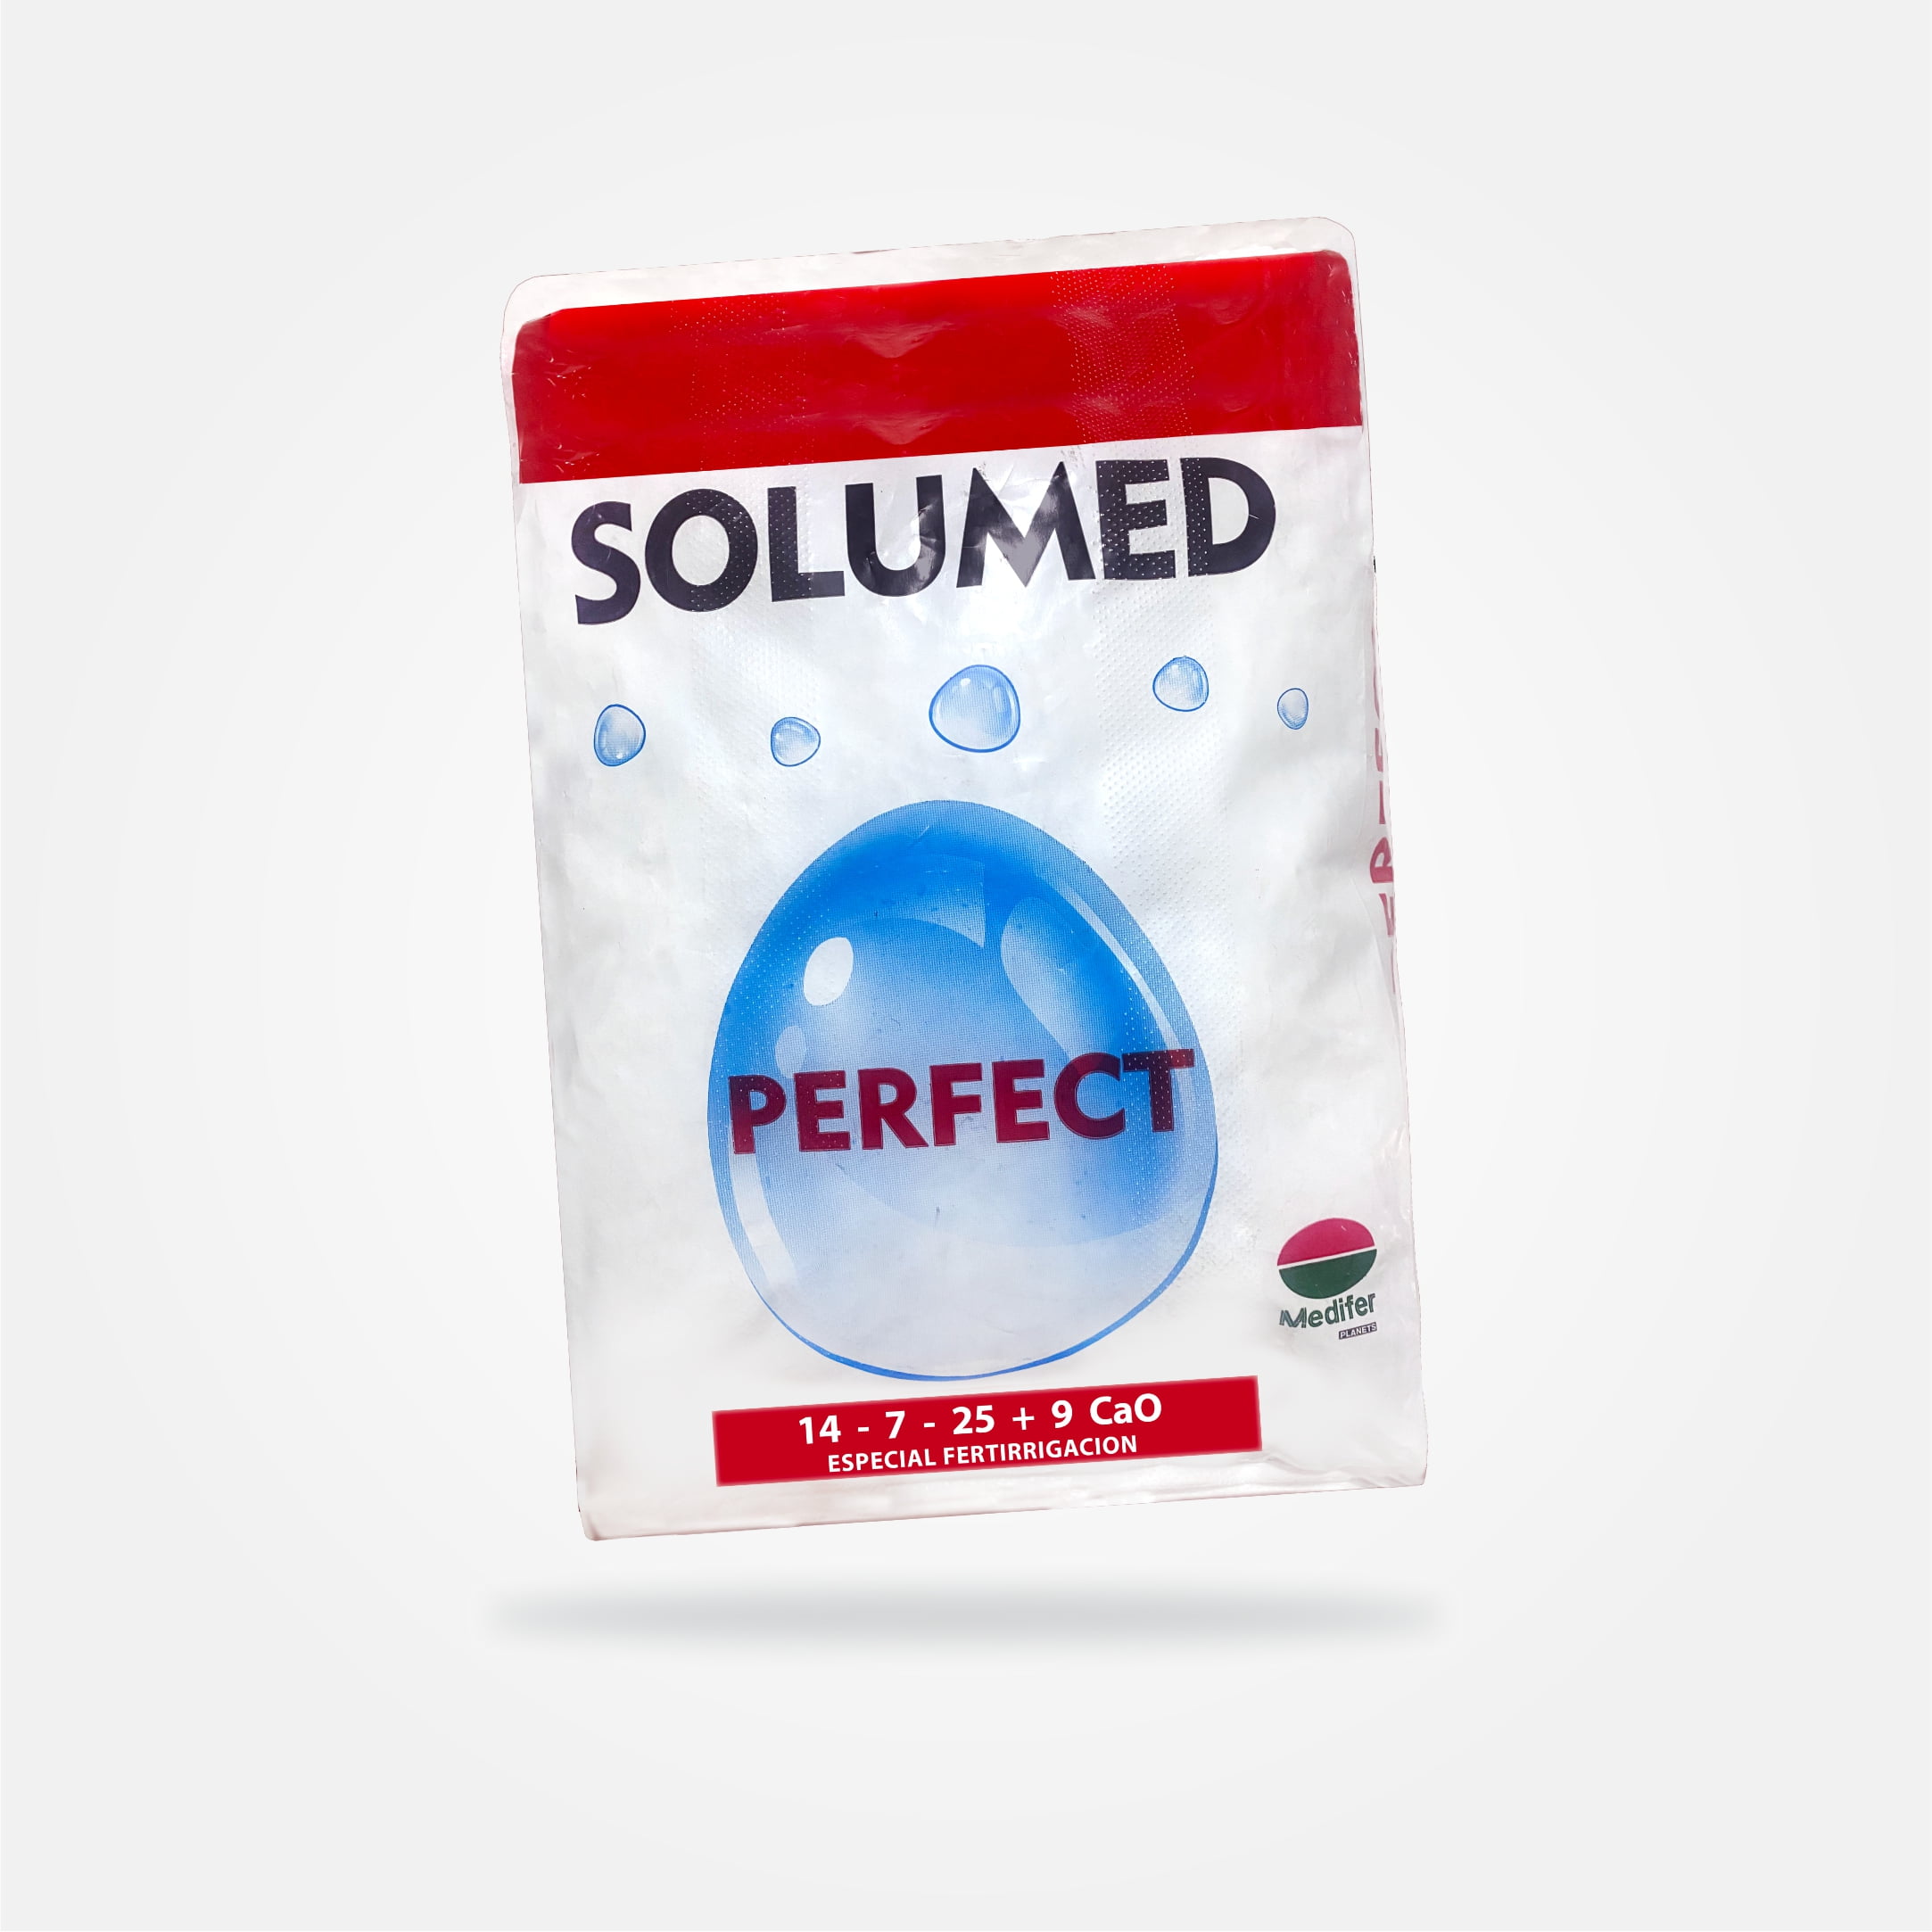 Solumed Perfect 1 - سولومد پرفکت